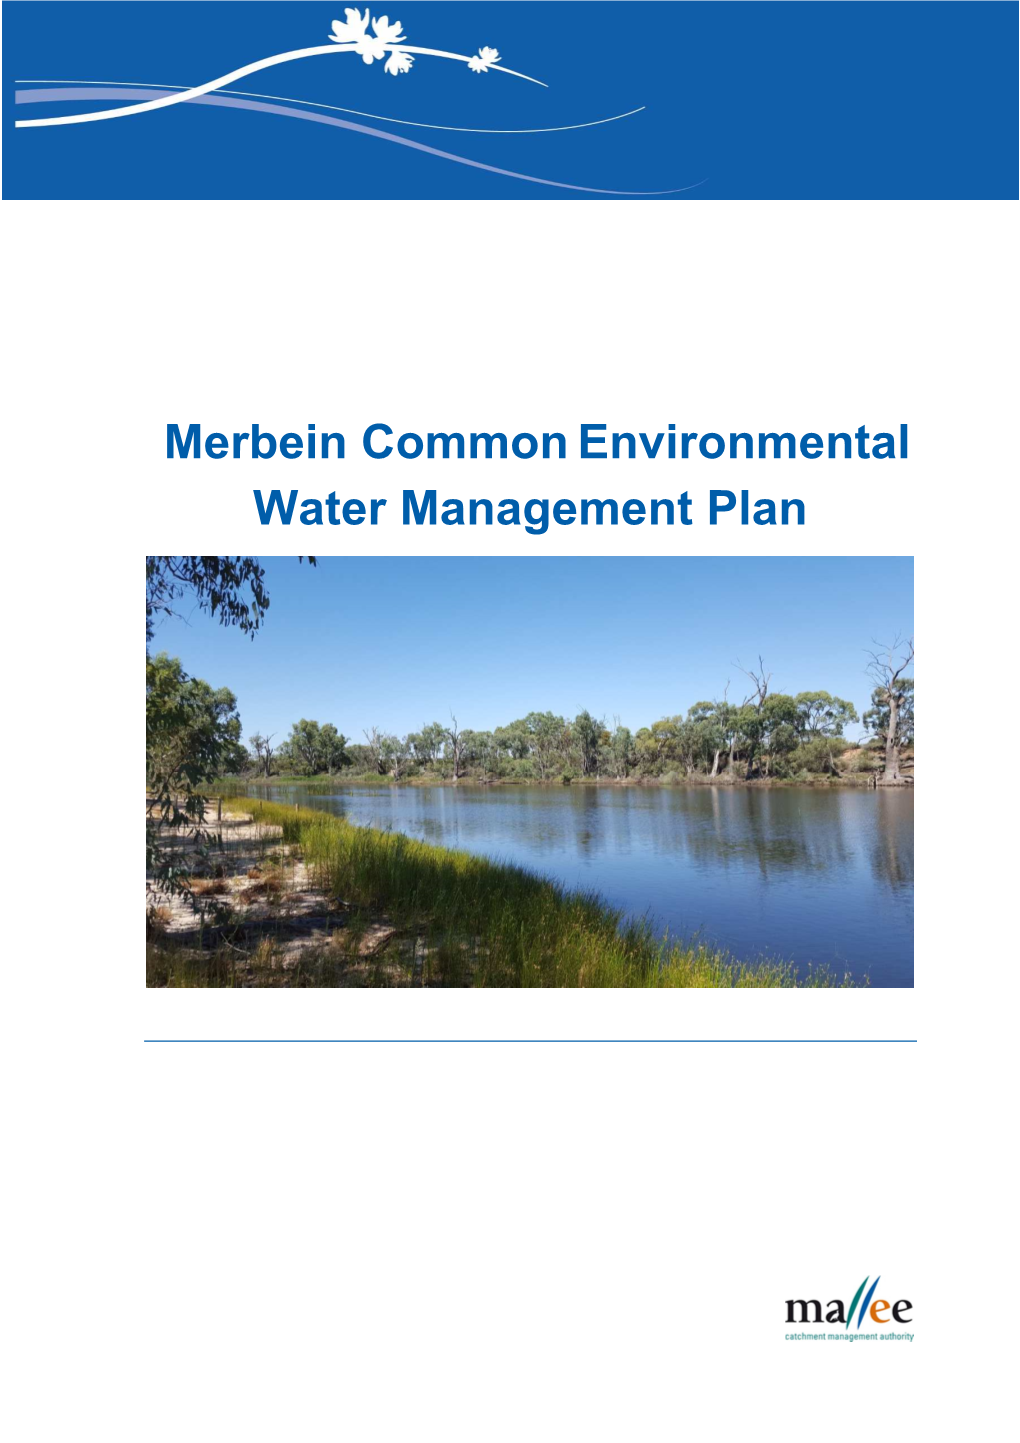 Merbein Commonenvironmental Water Management Plan